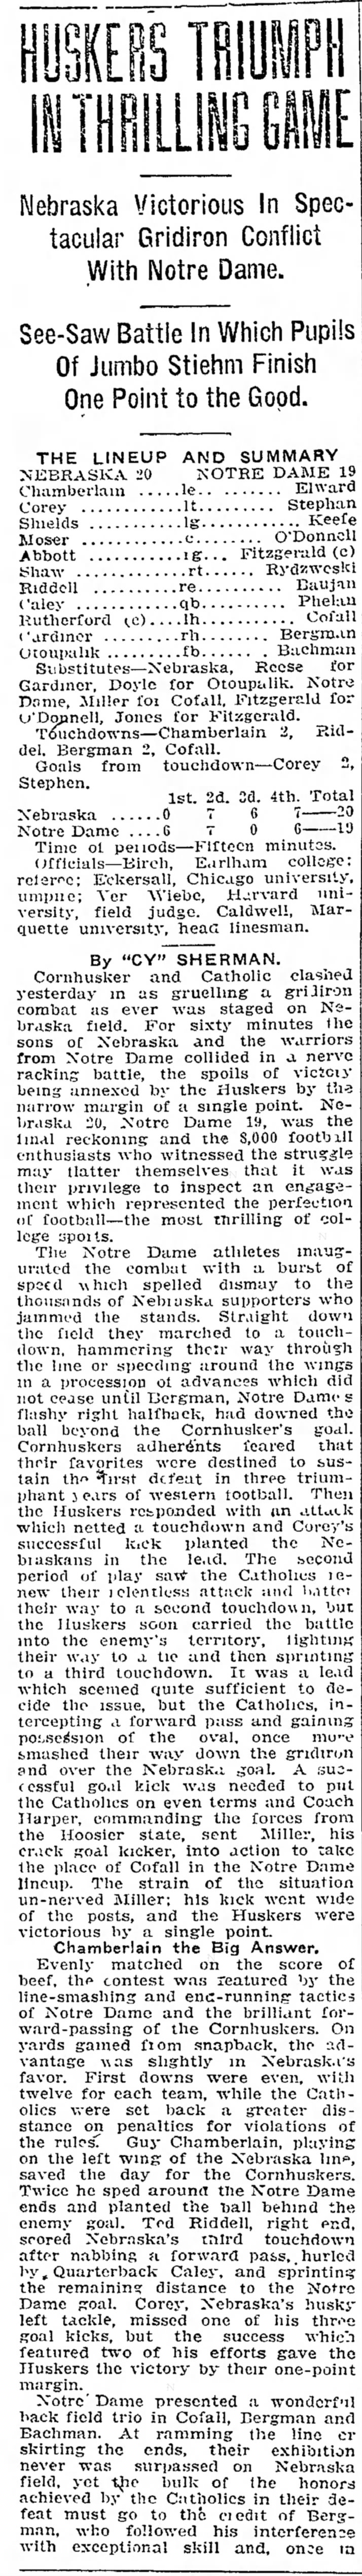 1915 Nebraska-Notre Dame football, part 1